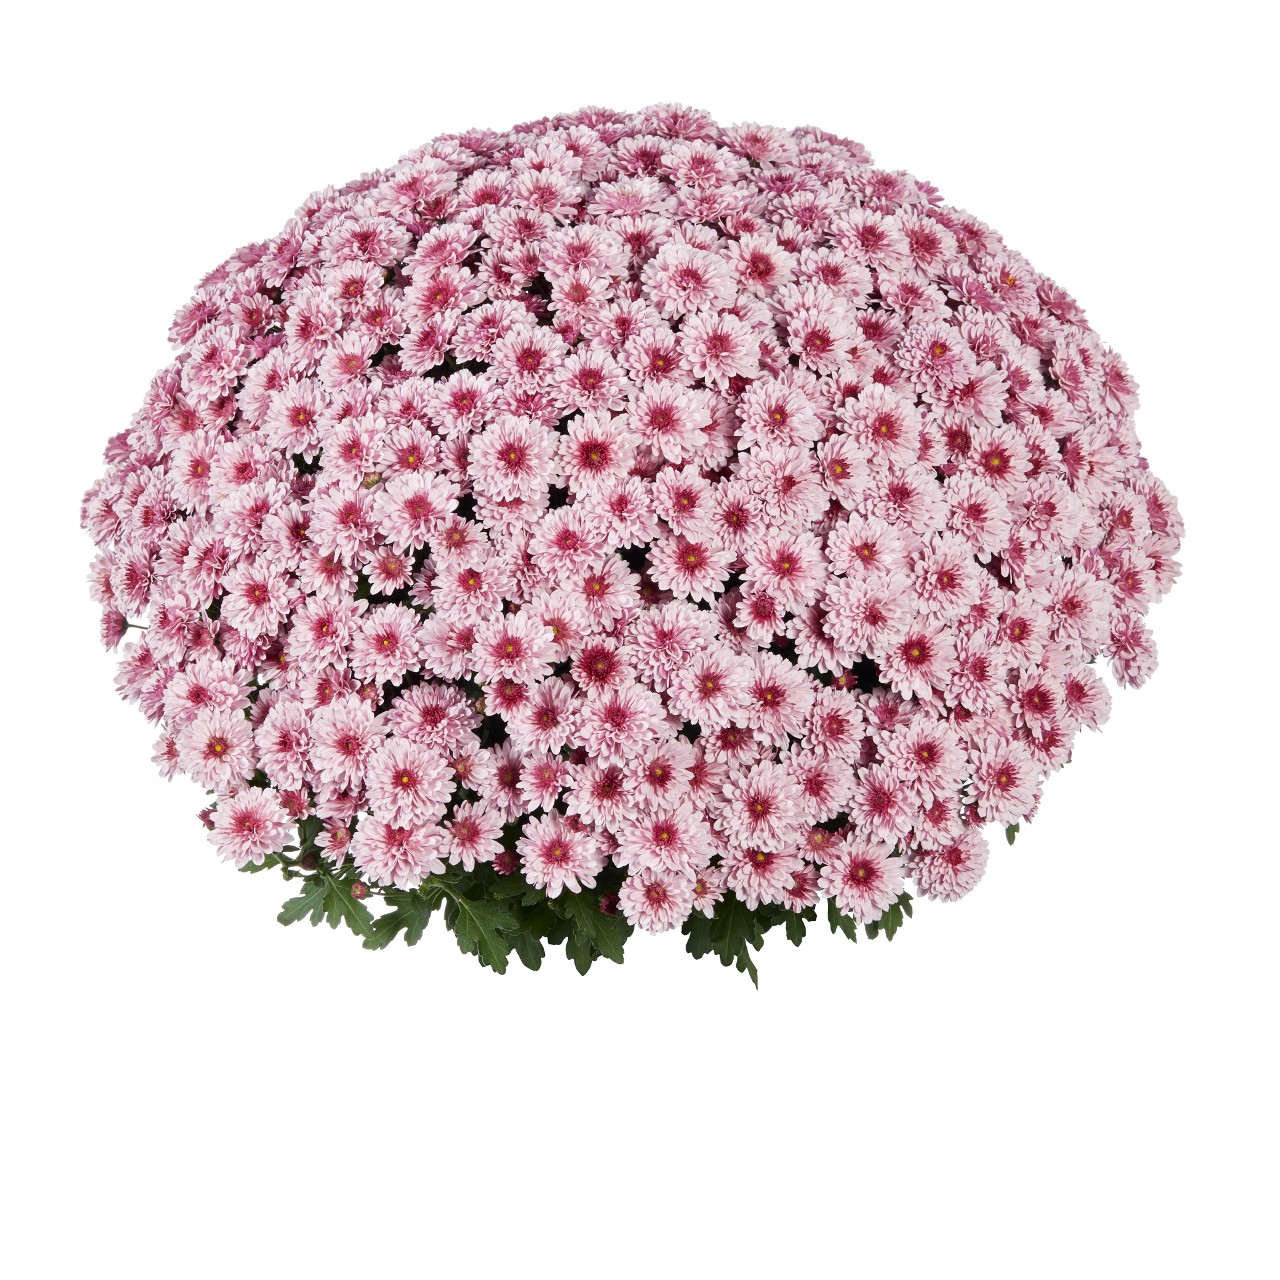 Mum chrysanthemum x morifolium 'Banquet Pink Bicolor'